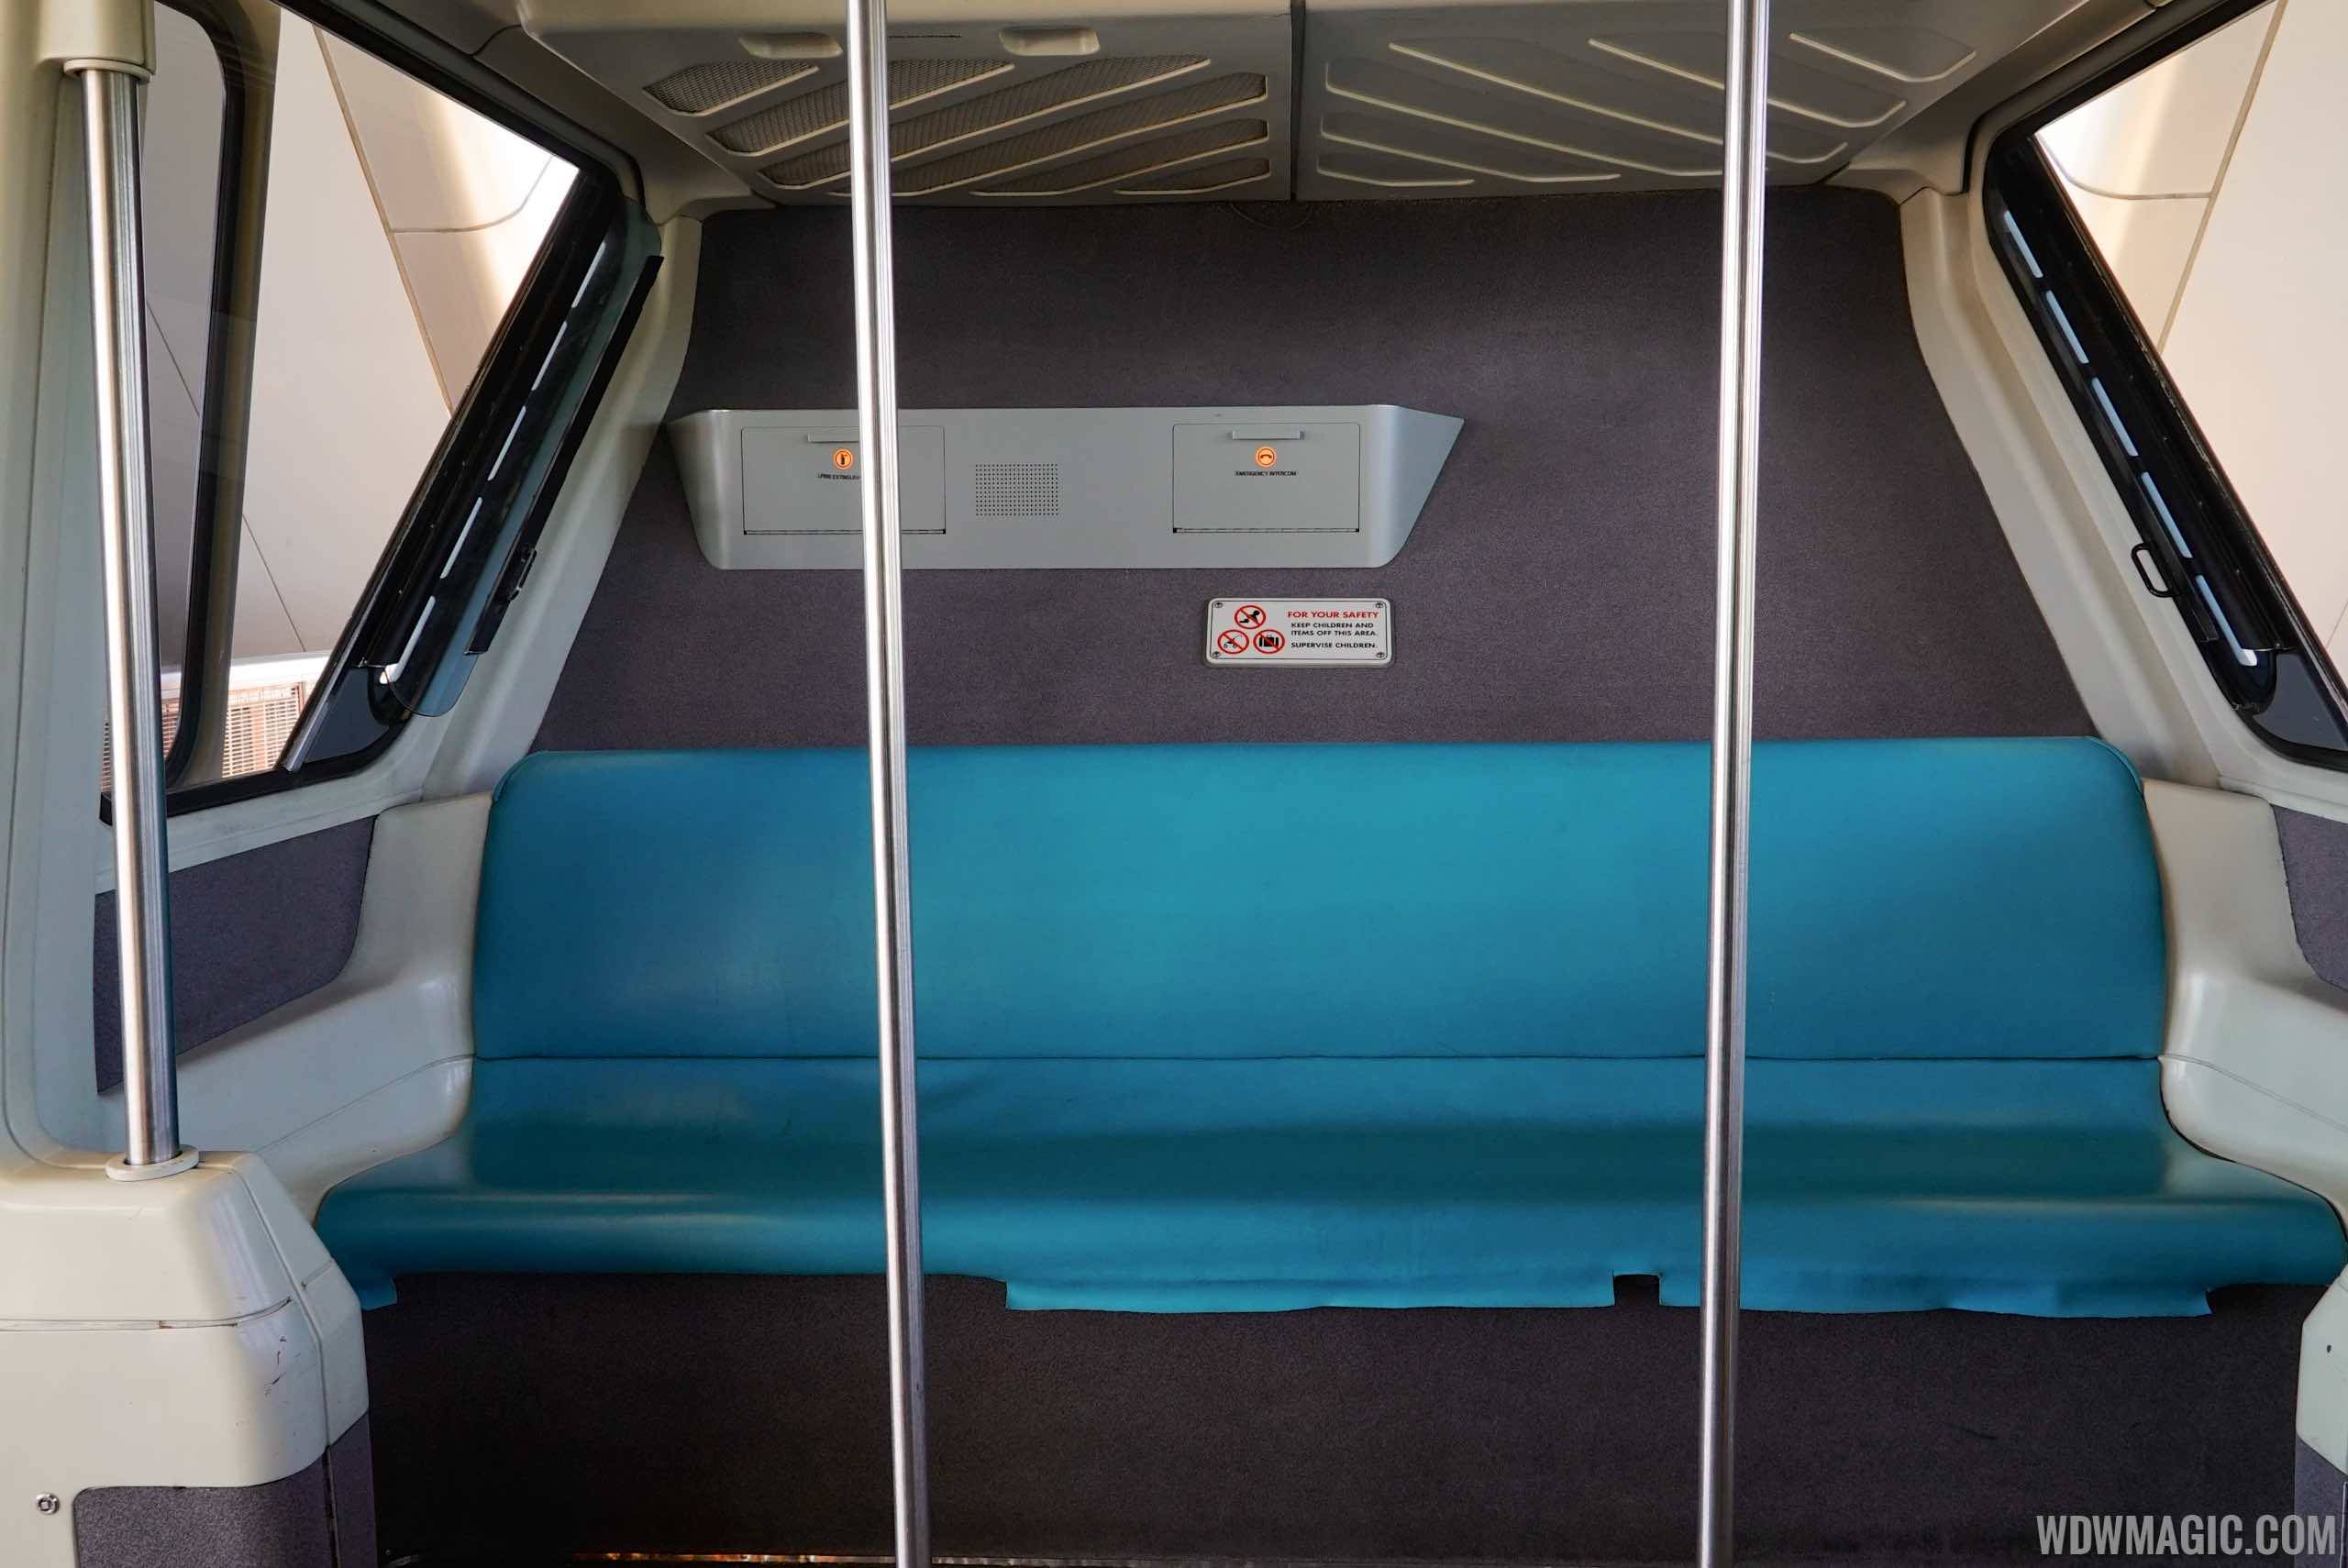 PHOTOS - New carpeting being installed on the Walt Disney World monorail fleet